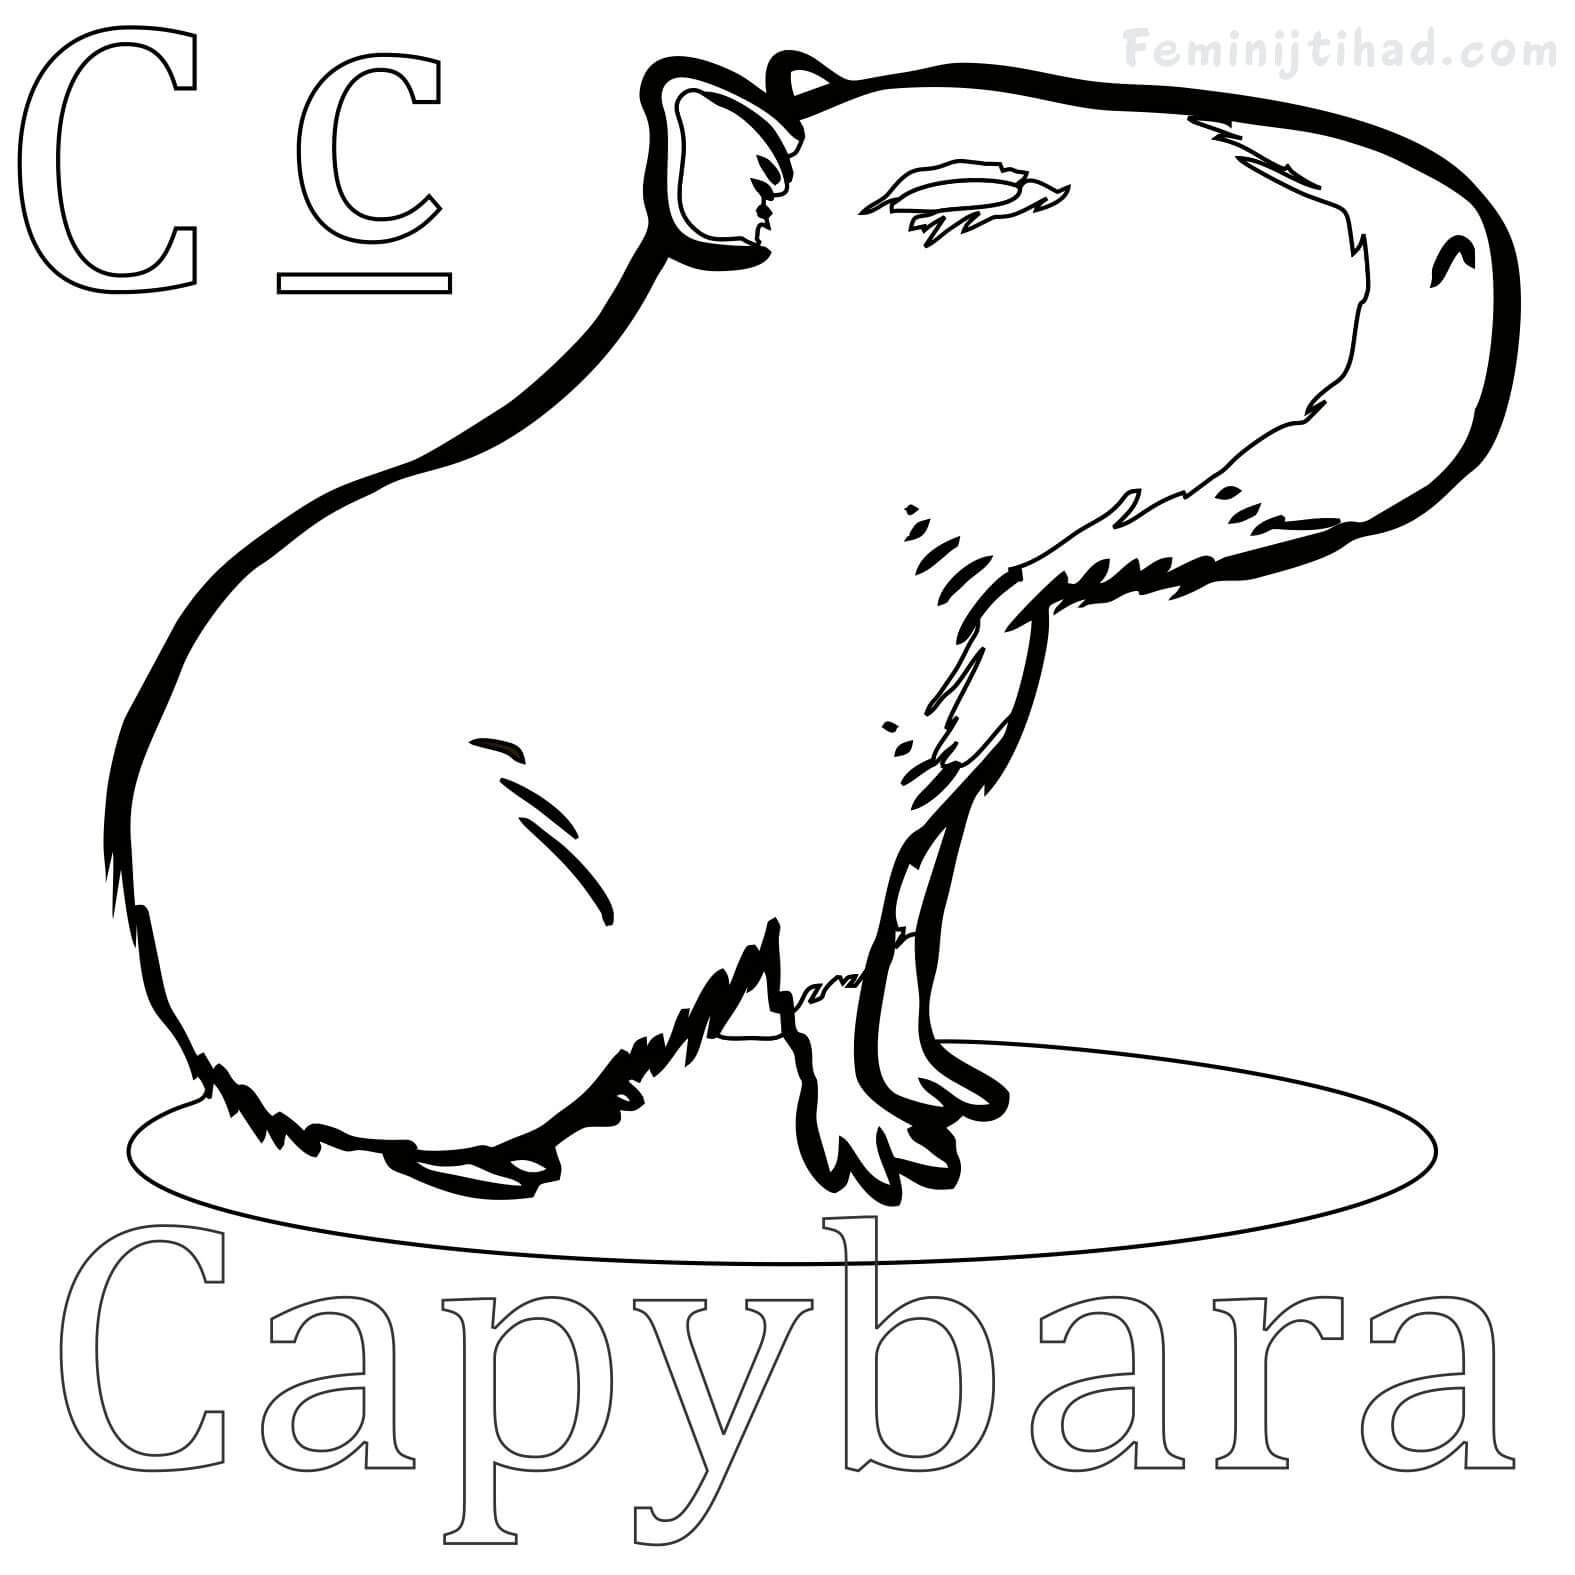 Easy Capybara Coloring Pages PDF - Coloringfolder.com | Animal coloring  pages, Capybara, Coloring pages